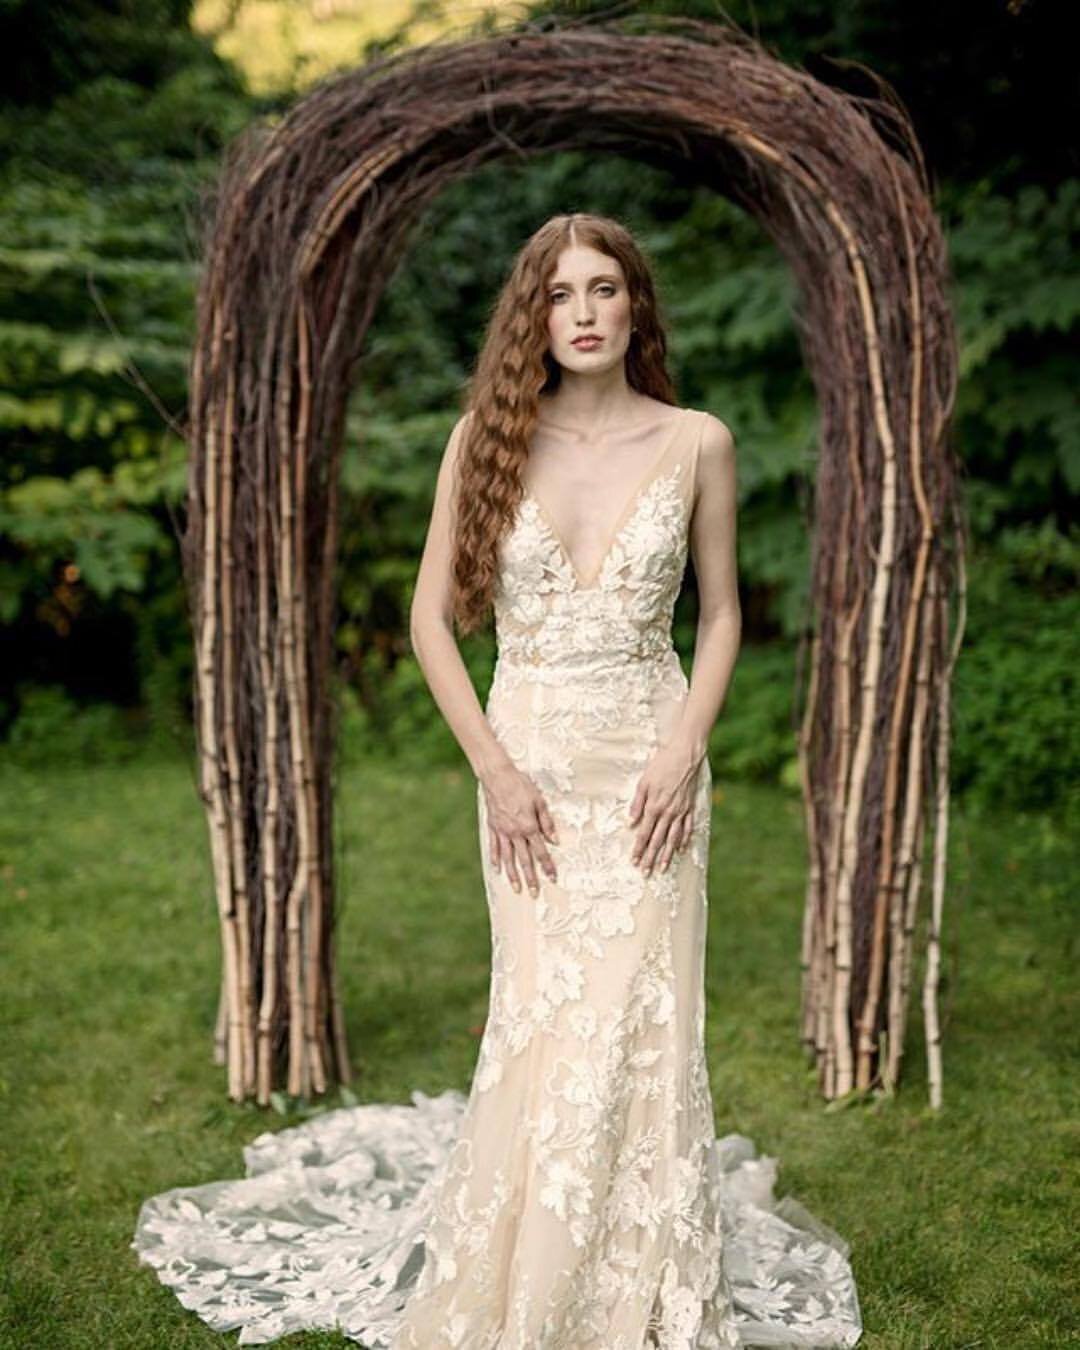 erica-renee-beauty-redhead-long-waves-curls-romantic-bride-editorial-luxury-hair-and-makeup-freckles-natural-bohemian-model-bride-CT-NYC-RI-luxury-wedding